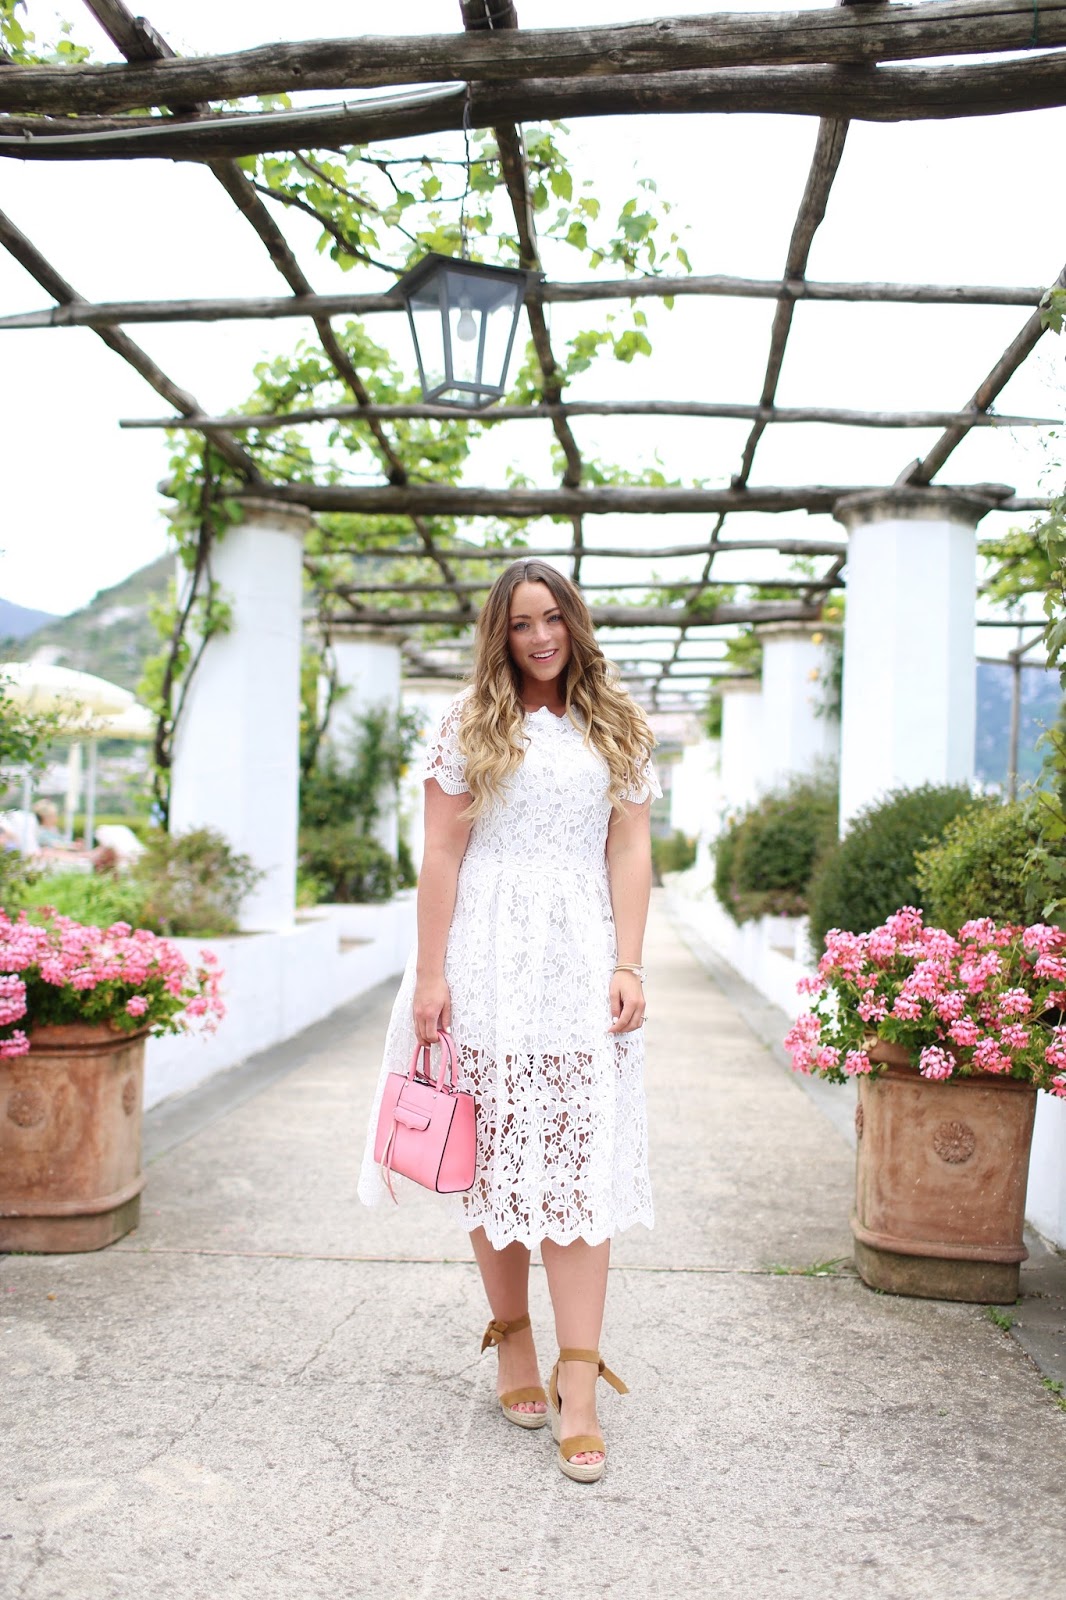 White Lace Dress in Ravello Garden